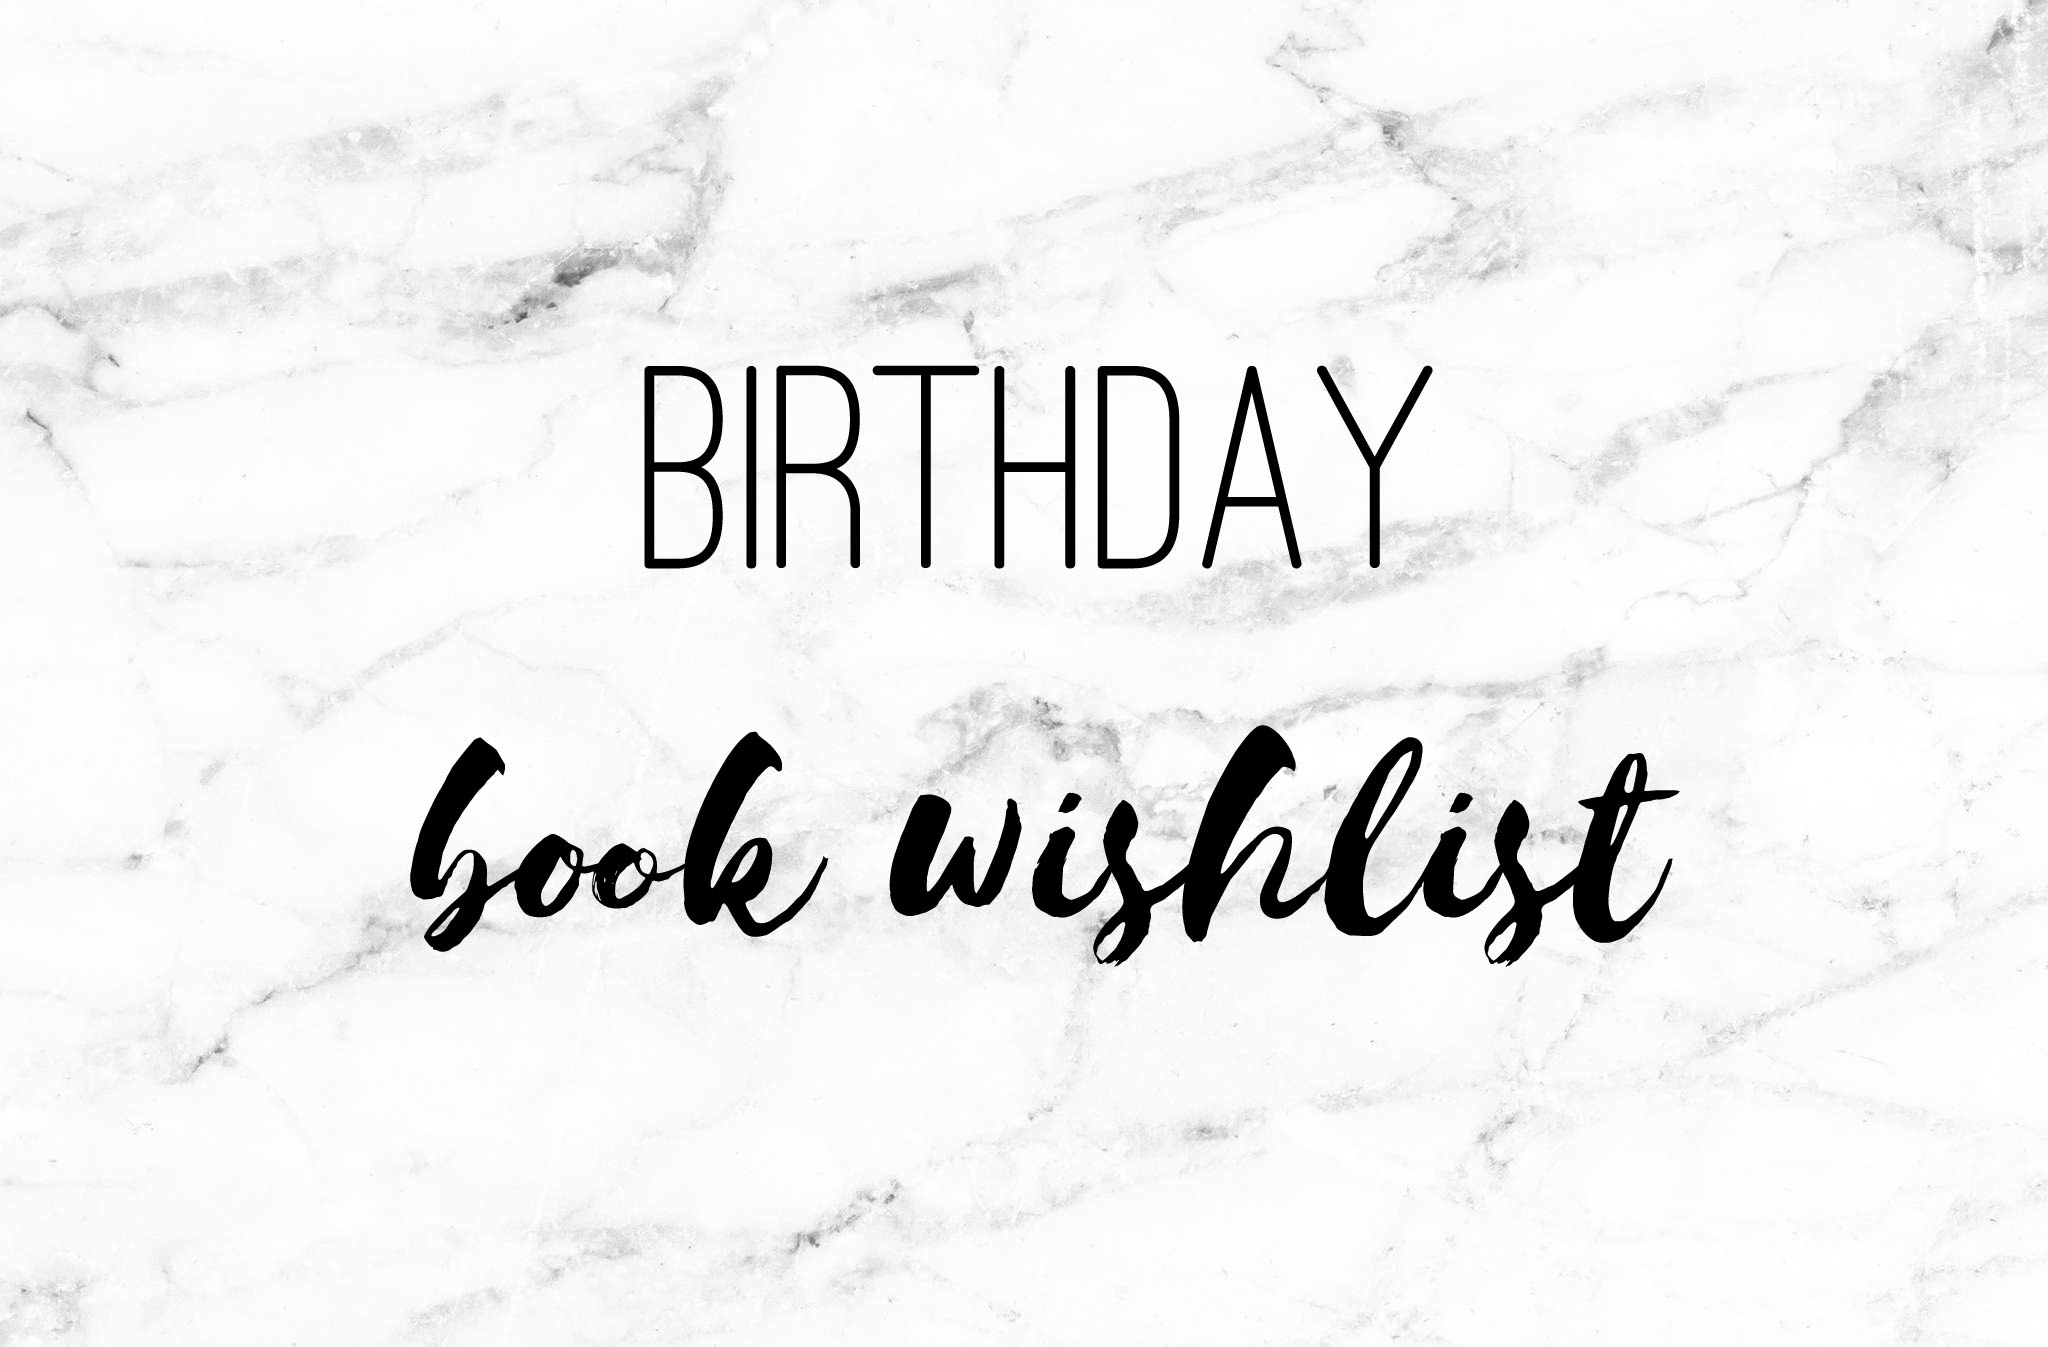 Birthday Book Wish List